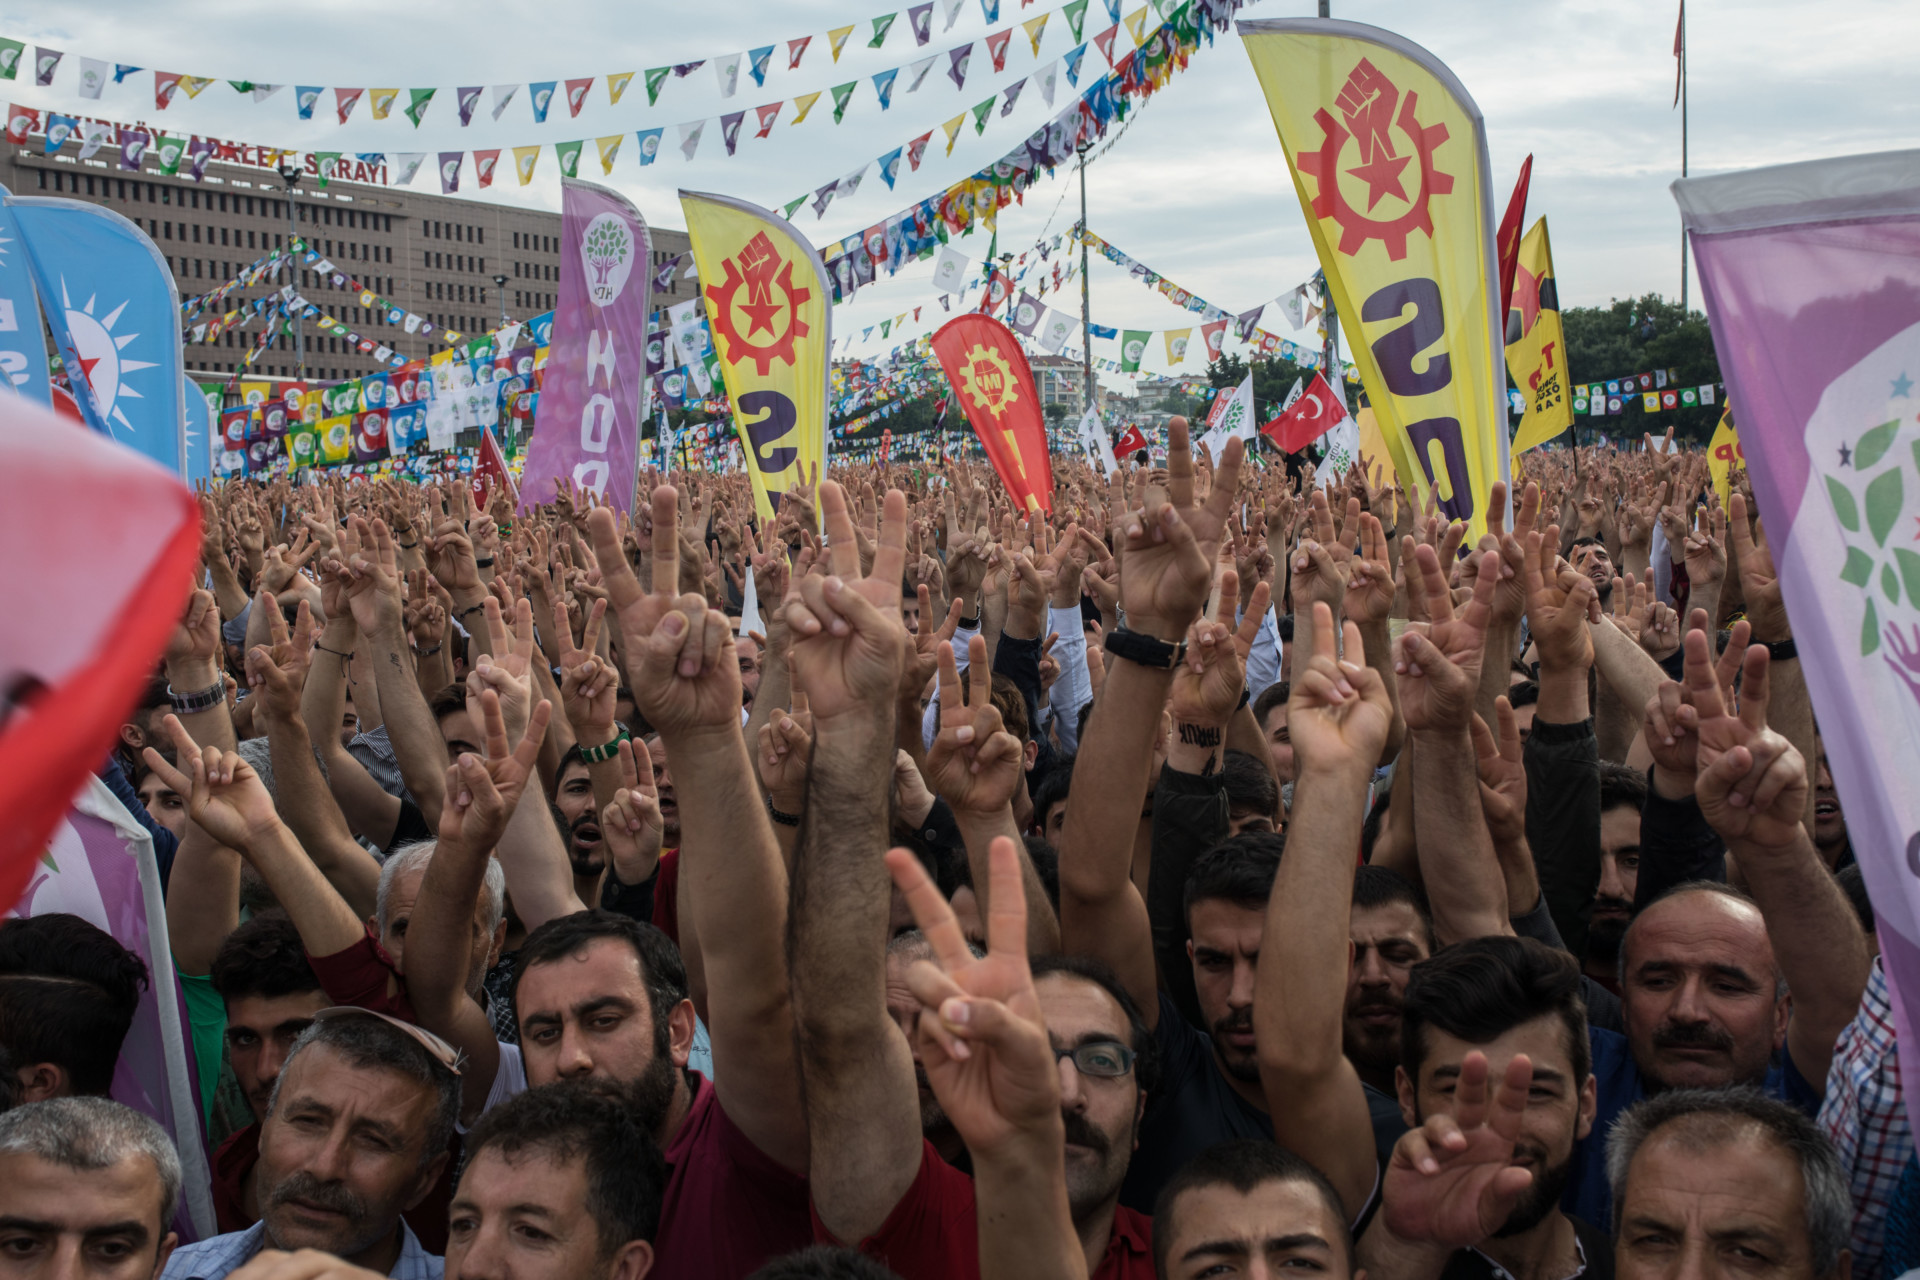 Turkey's President Recep Tayyip Erdogan Holds Campaign Rally In Istanbul|20211118-Kurd-Turkey-Quotes_Meral-Aksener-P3|20211118-Kurd-Turkey-Quotes_Kemal-Kilicdaroglu-P3|20211118-Kurd-Turkey-Quotes_Selahattin-Demirtas-P3